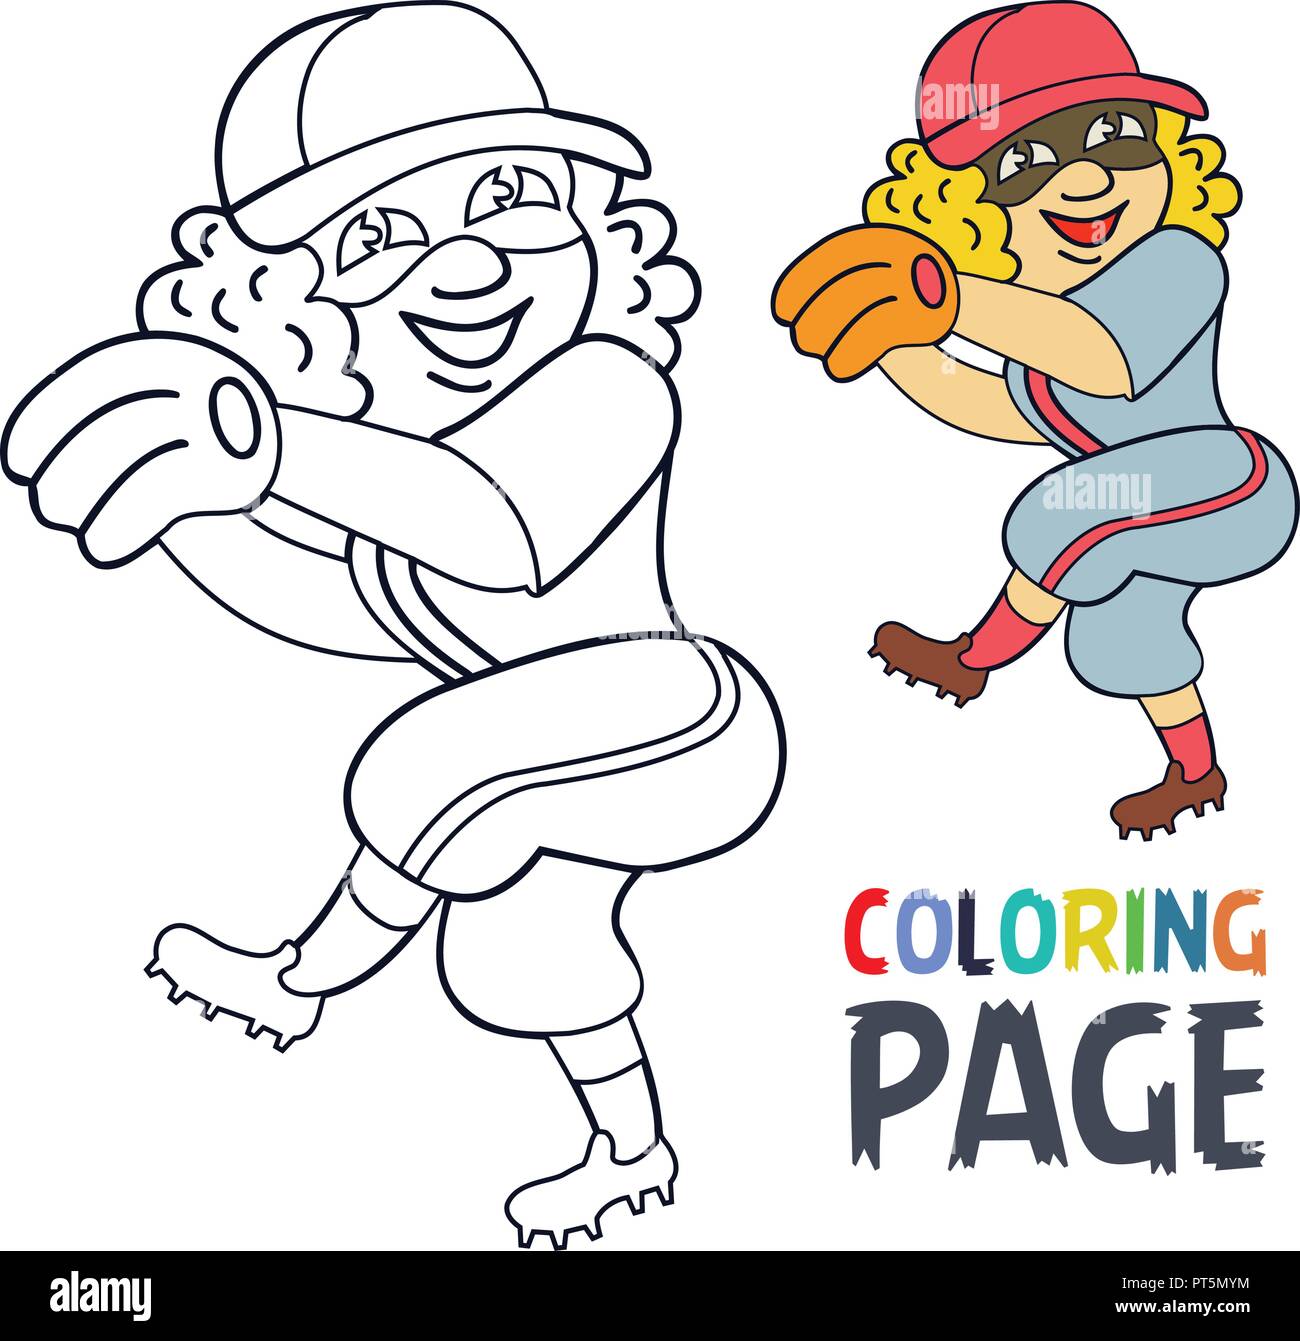 Coloriage avec femme baseball player cartoon Illustration de Vecteur